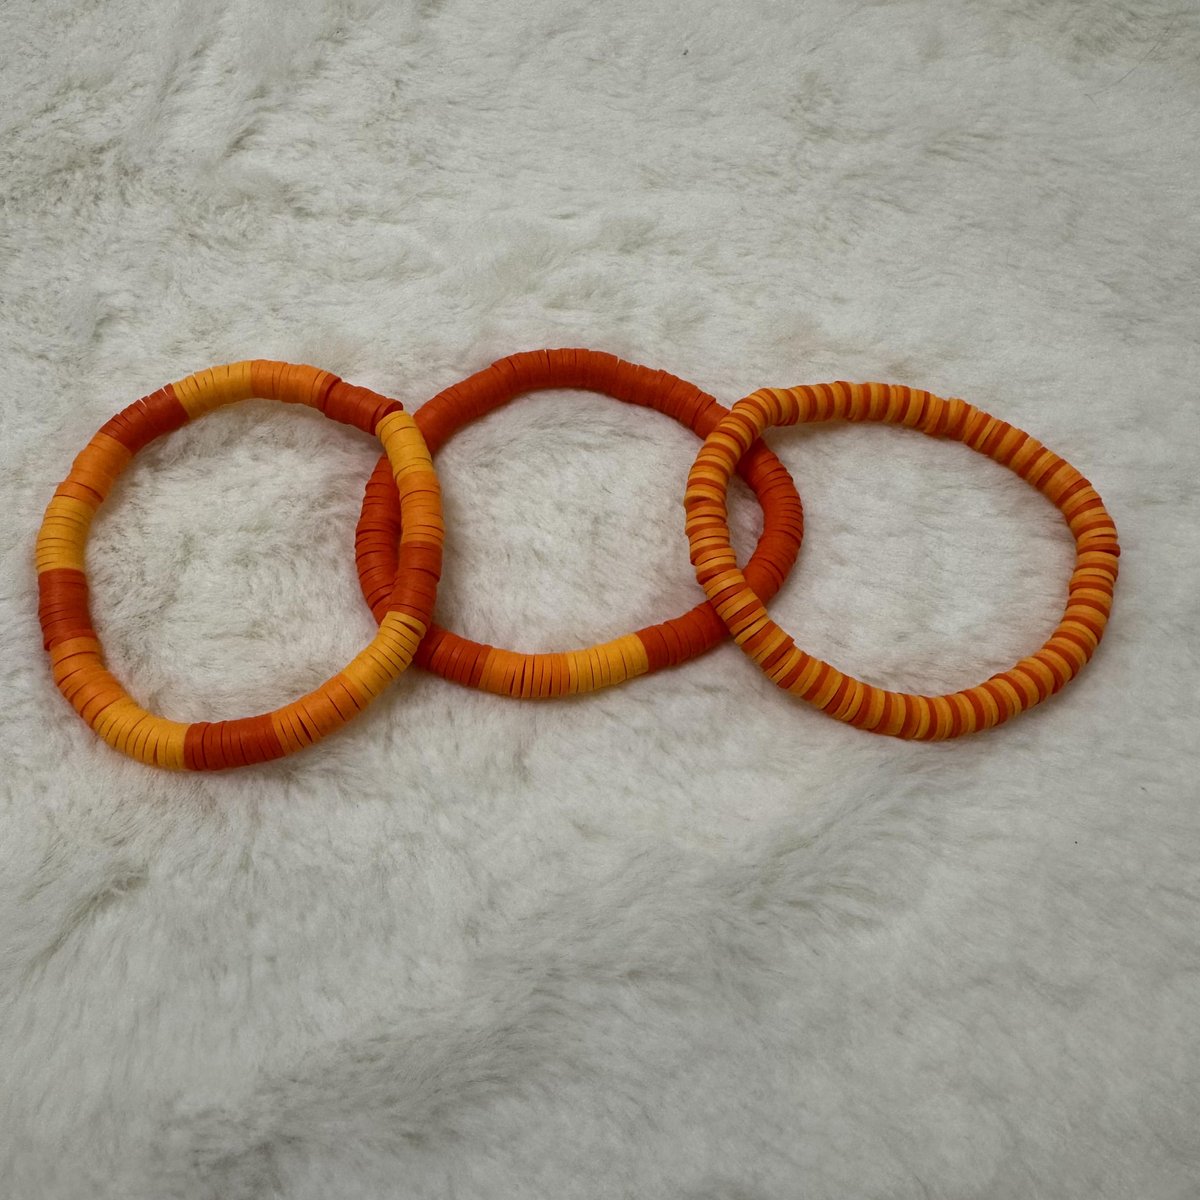 Orange Heishi Clay Bead Bracelet Trio

aldesignsbyashley.etsy.com

#etsyshop #etsyseller #etsyhandmade #etsy #handmade #handmadejewelry #handmadeearrings #earrings #handmadeearringsforsale #earringstyle #etsygifts #etsysellersofinstagram #jewelry #jewelrydesign